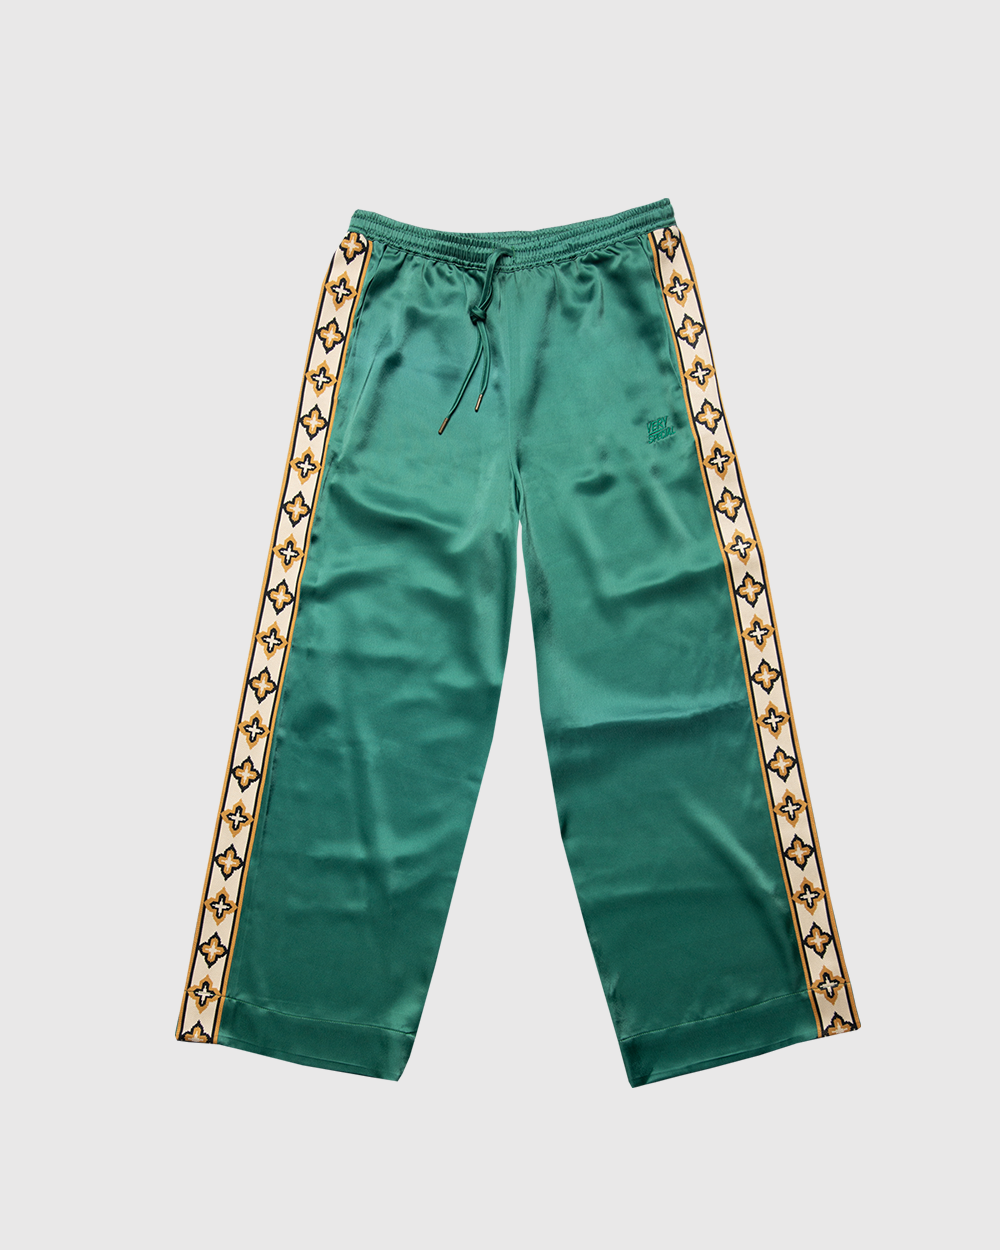 Green Satin "Diamond" Vacay Pants